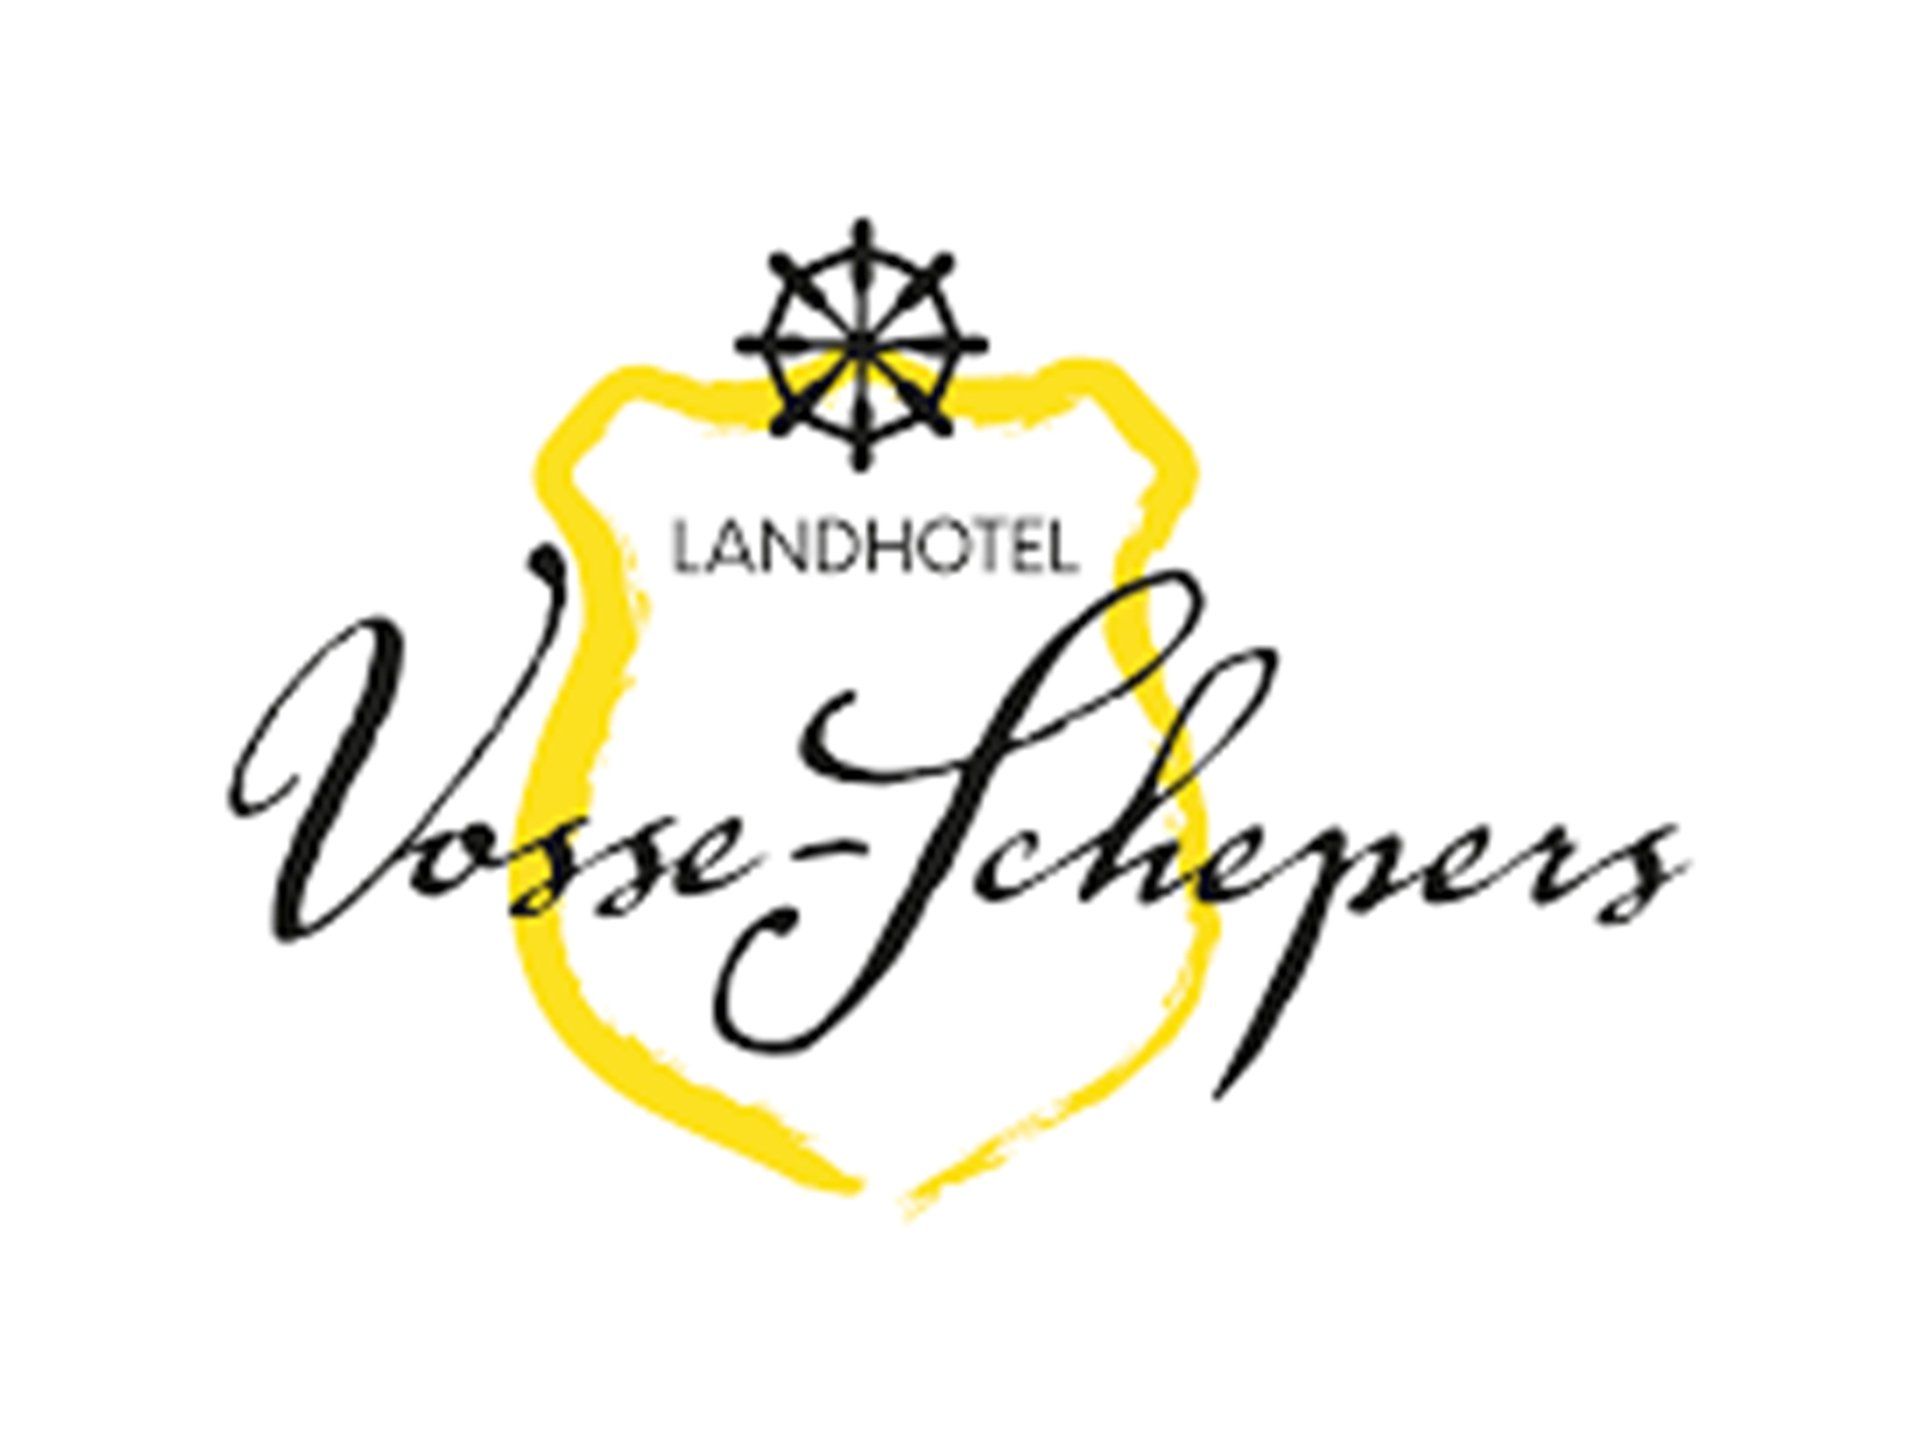 Vosse-Schepers Logo